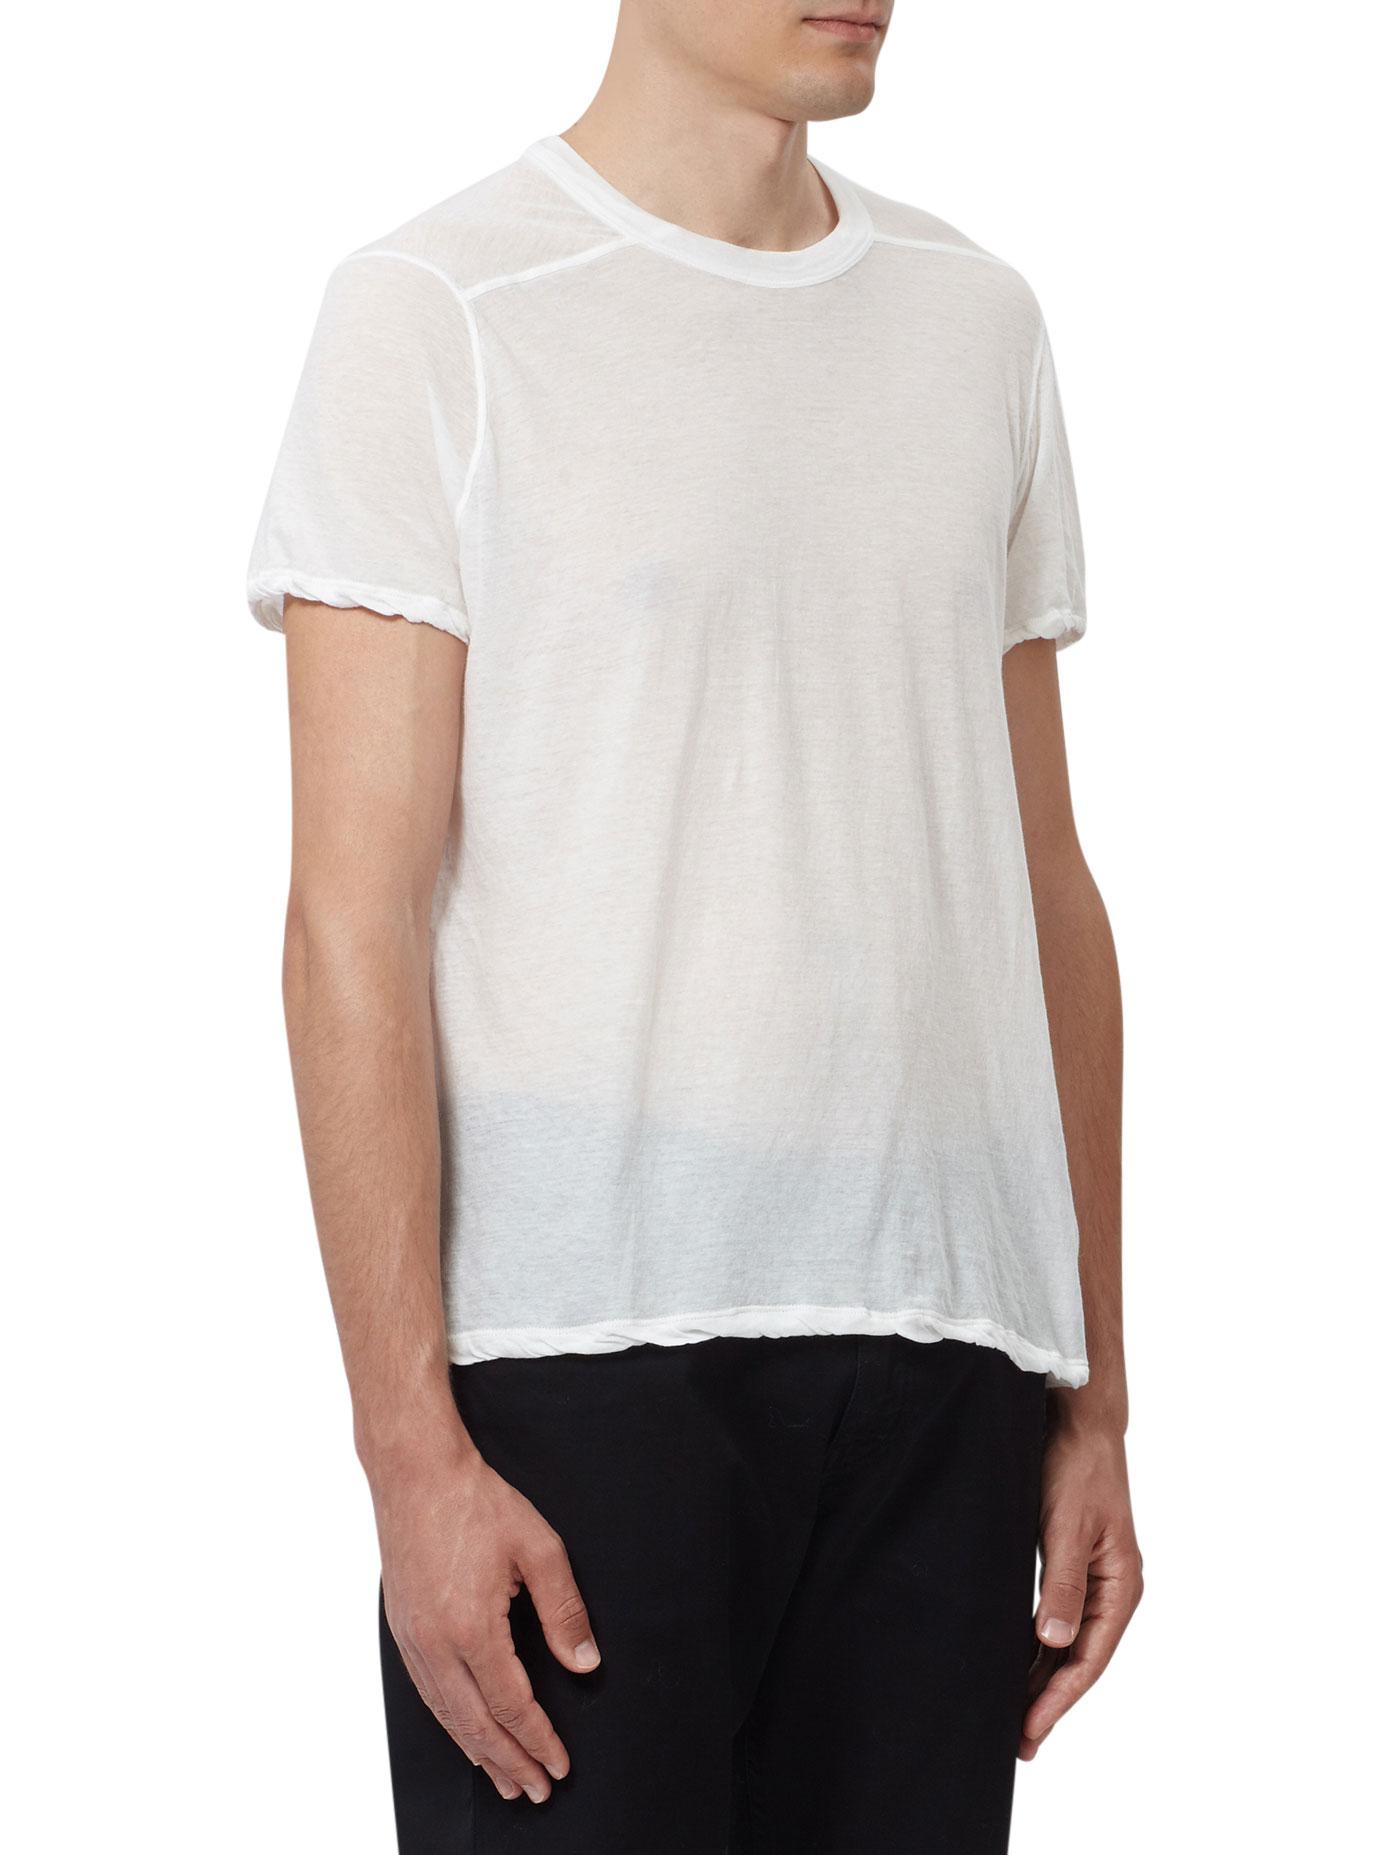 Gebakjes Vermeend Toevallig Rick Owens Semi Transparent Cotton T-shirt in White for Men | Lyst